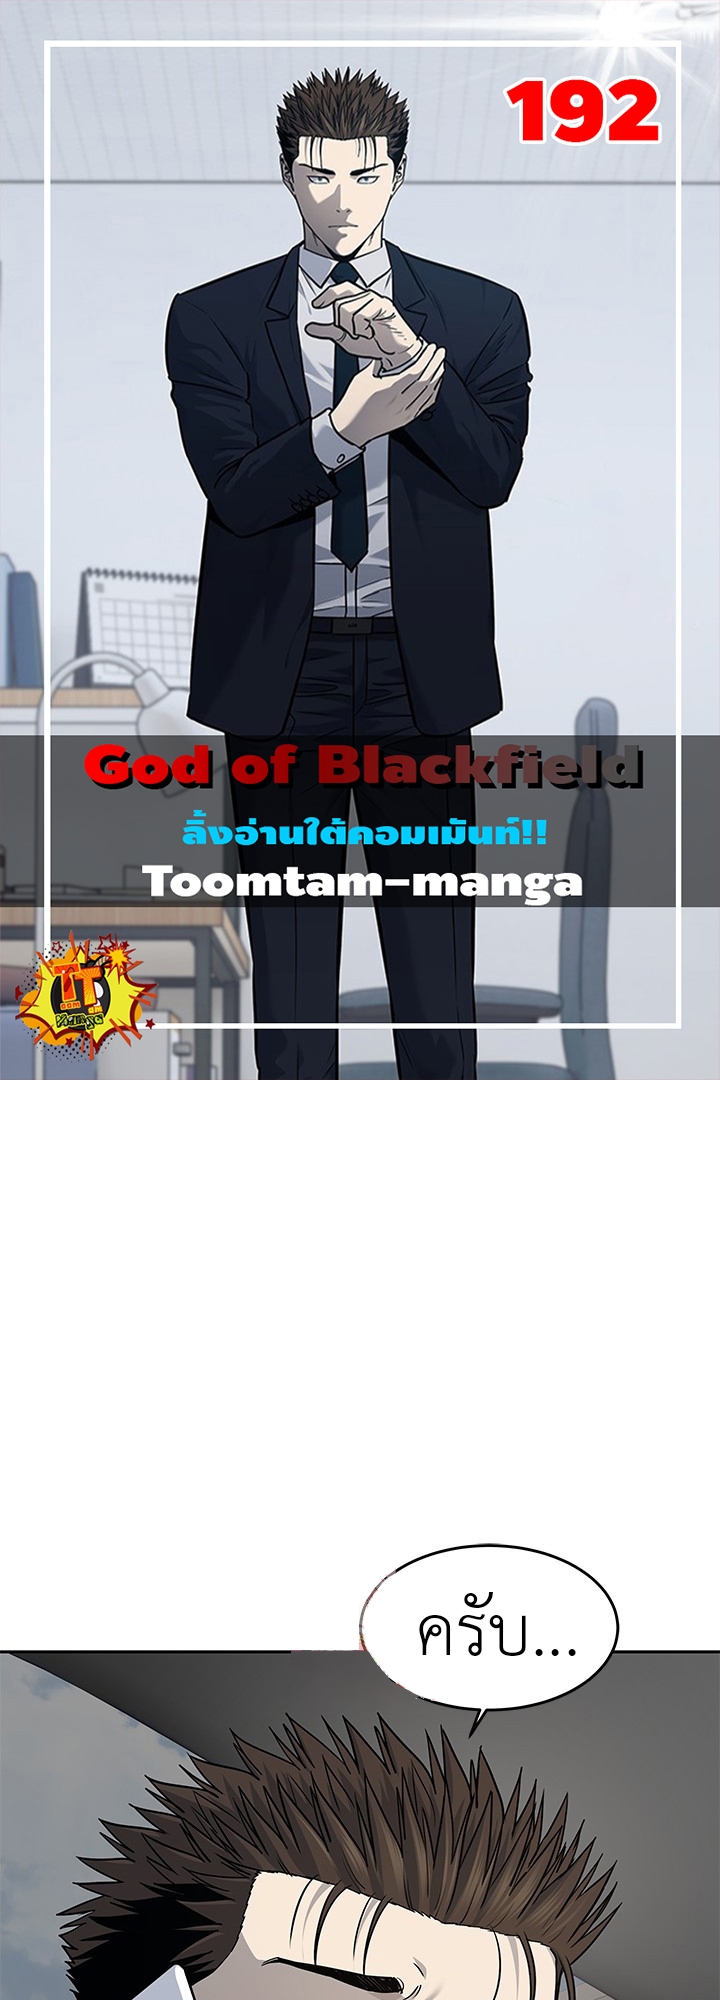 God of Blackfield 192 12 1 25670001